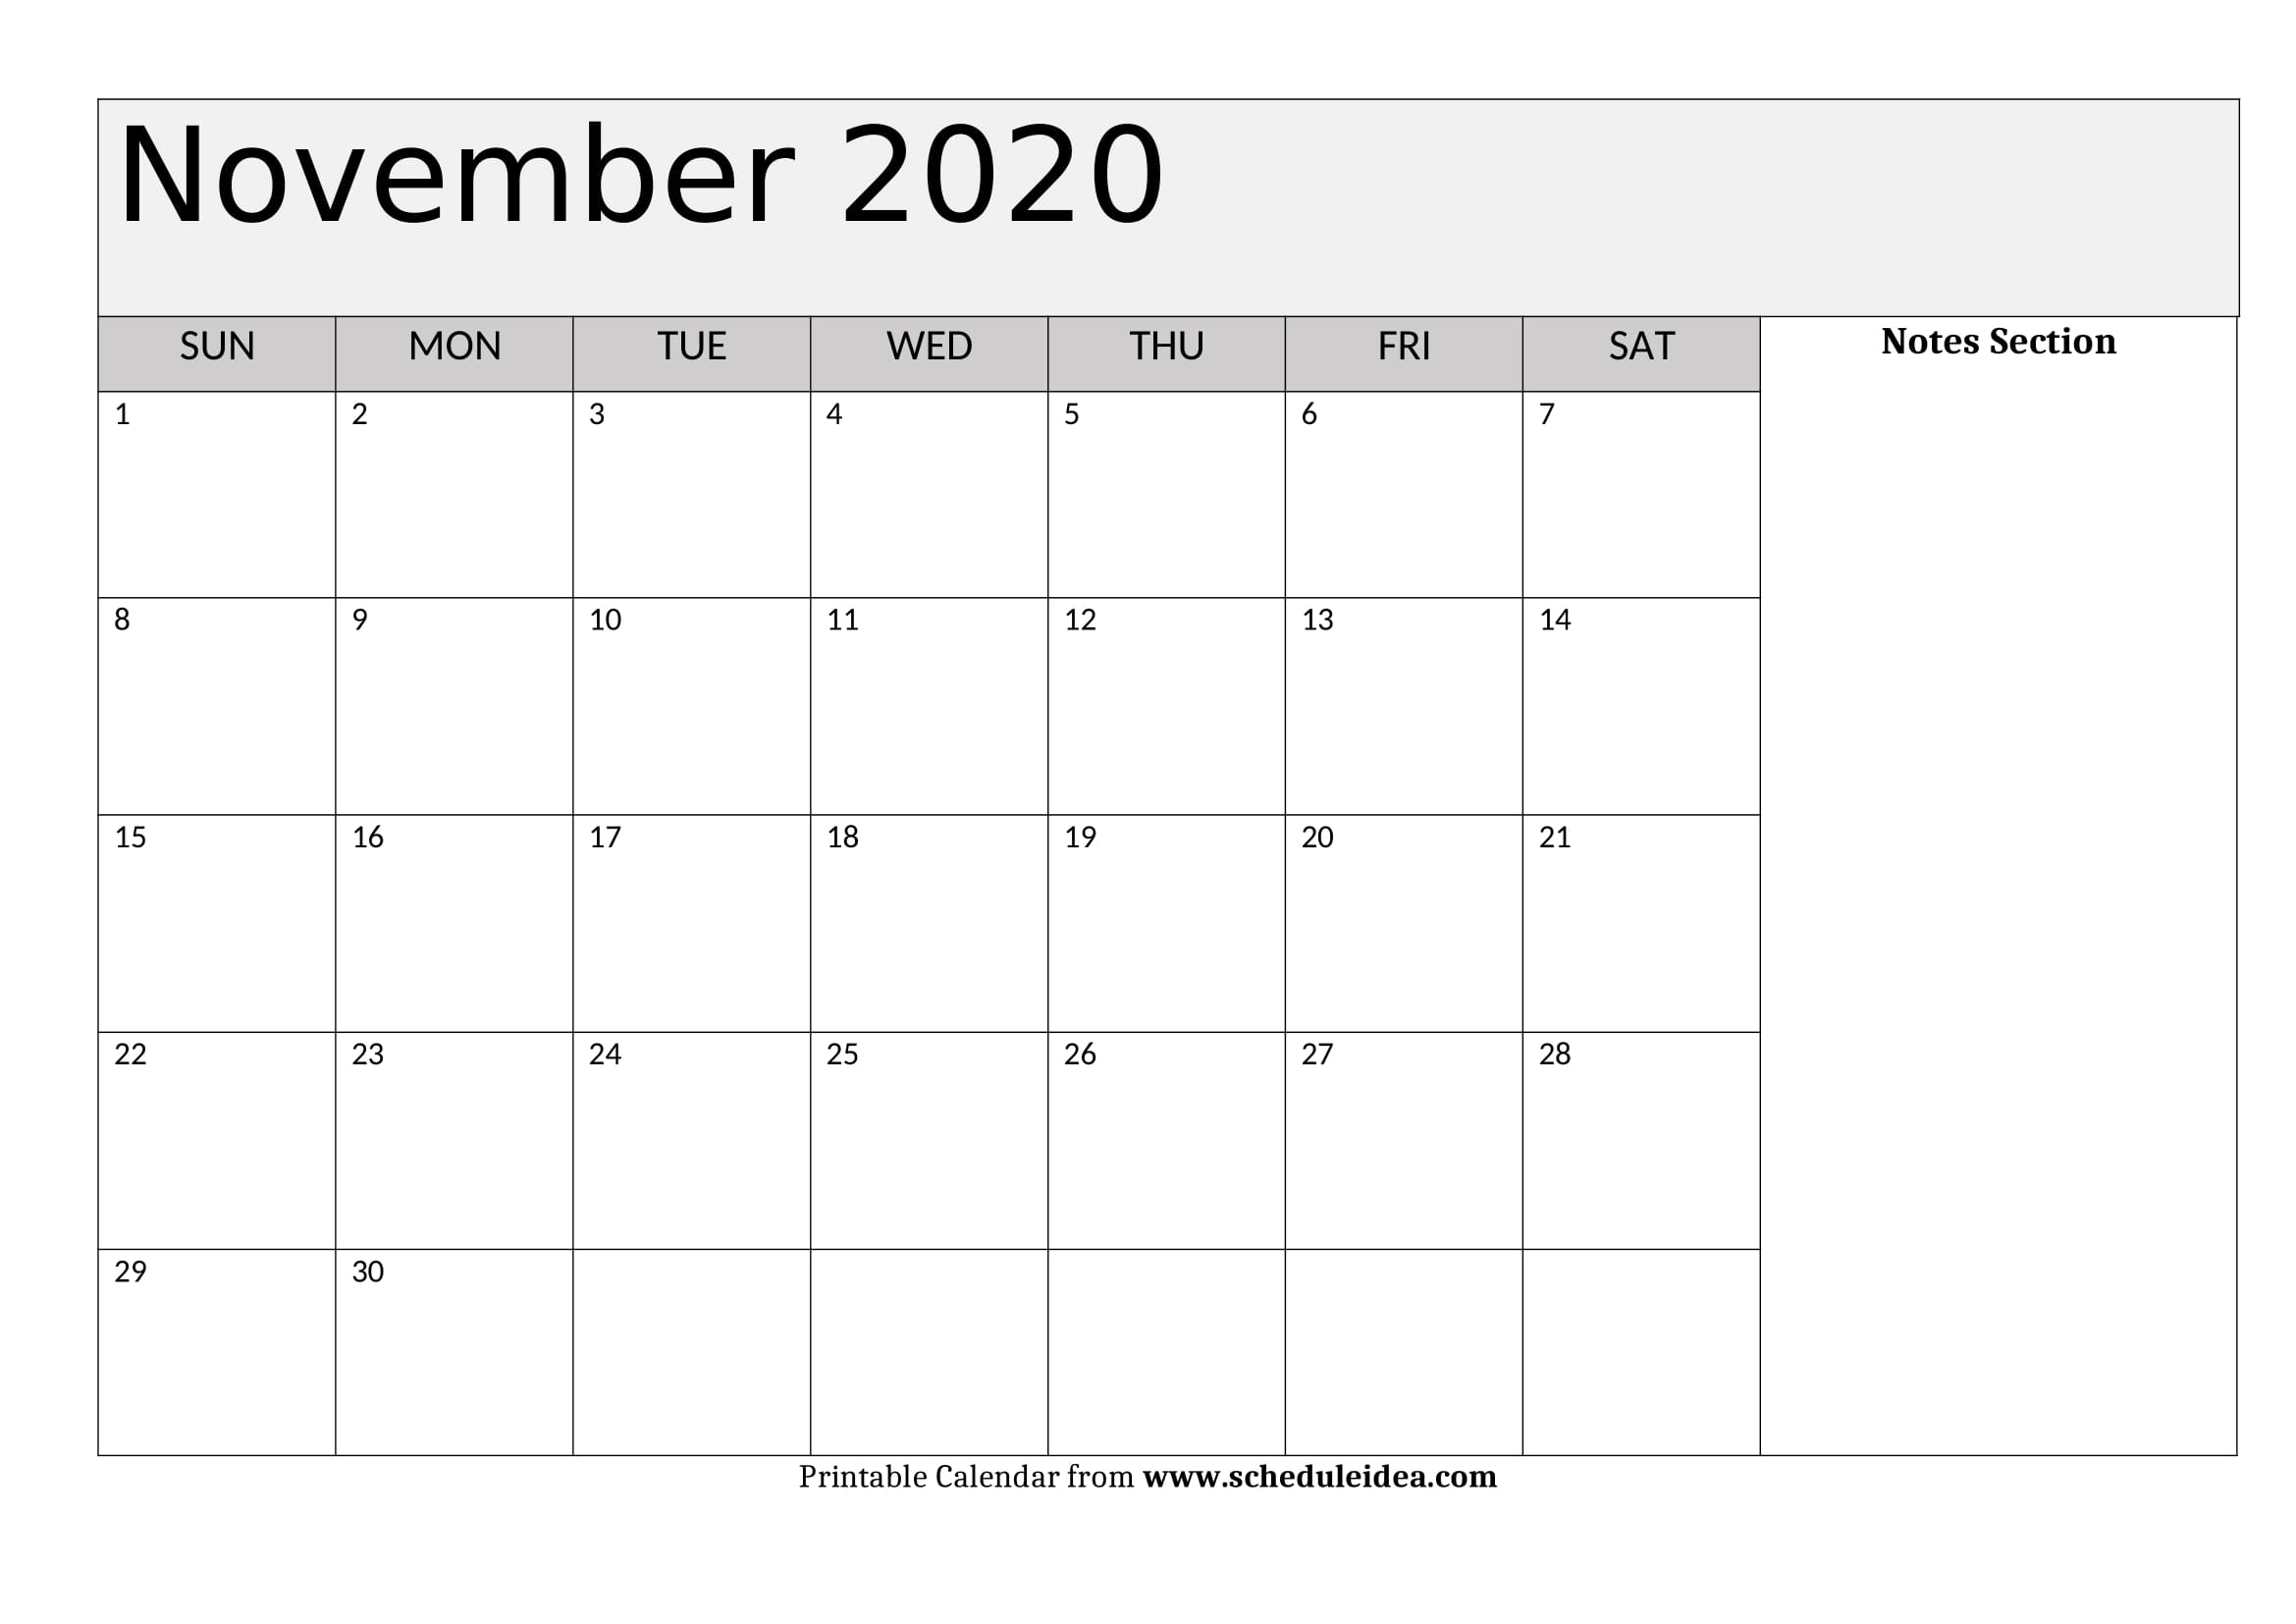 November 2020 Printable Calendar - Editable Templates (Pdf